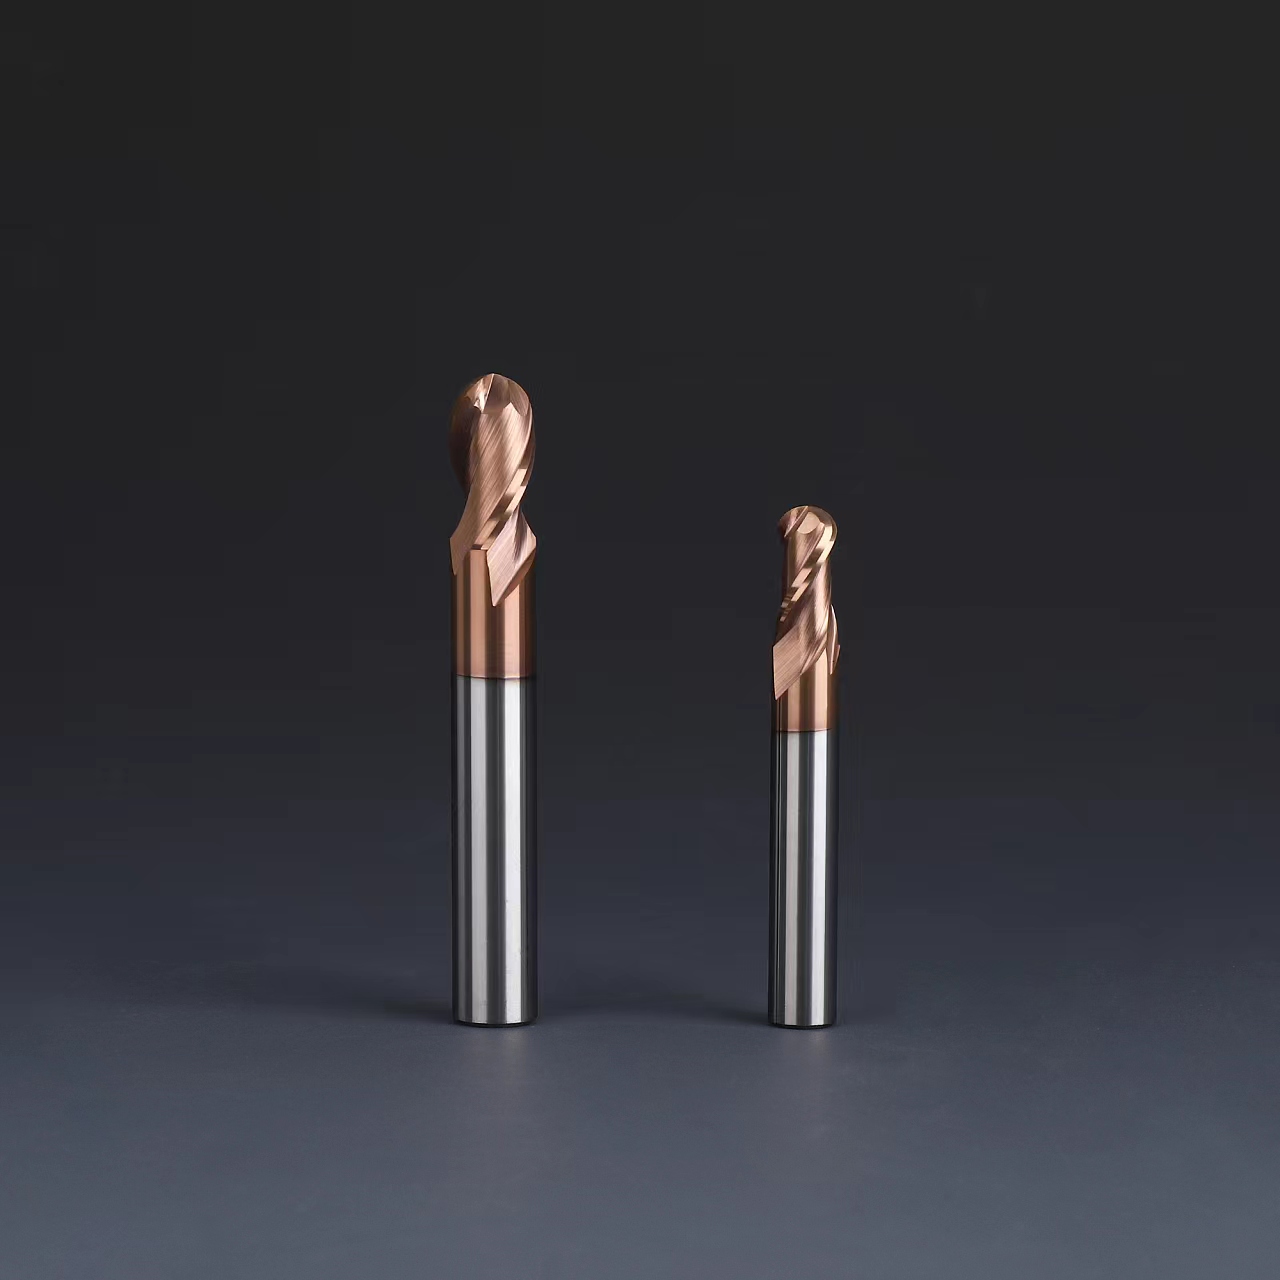 Kyocera SGS End Mills Feature Seven-Flute Design |               Modern Machine Shop